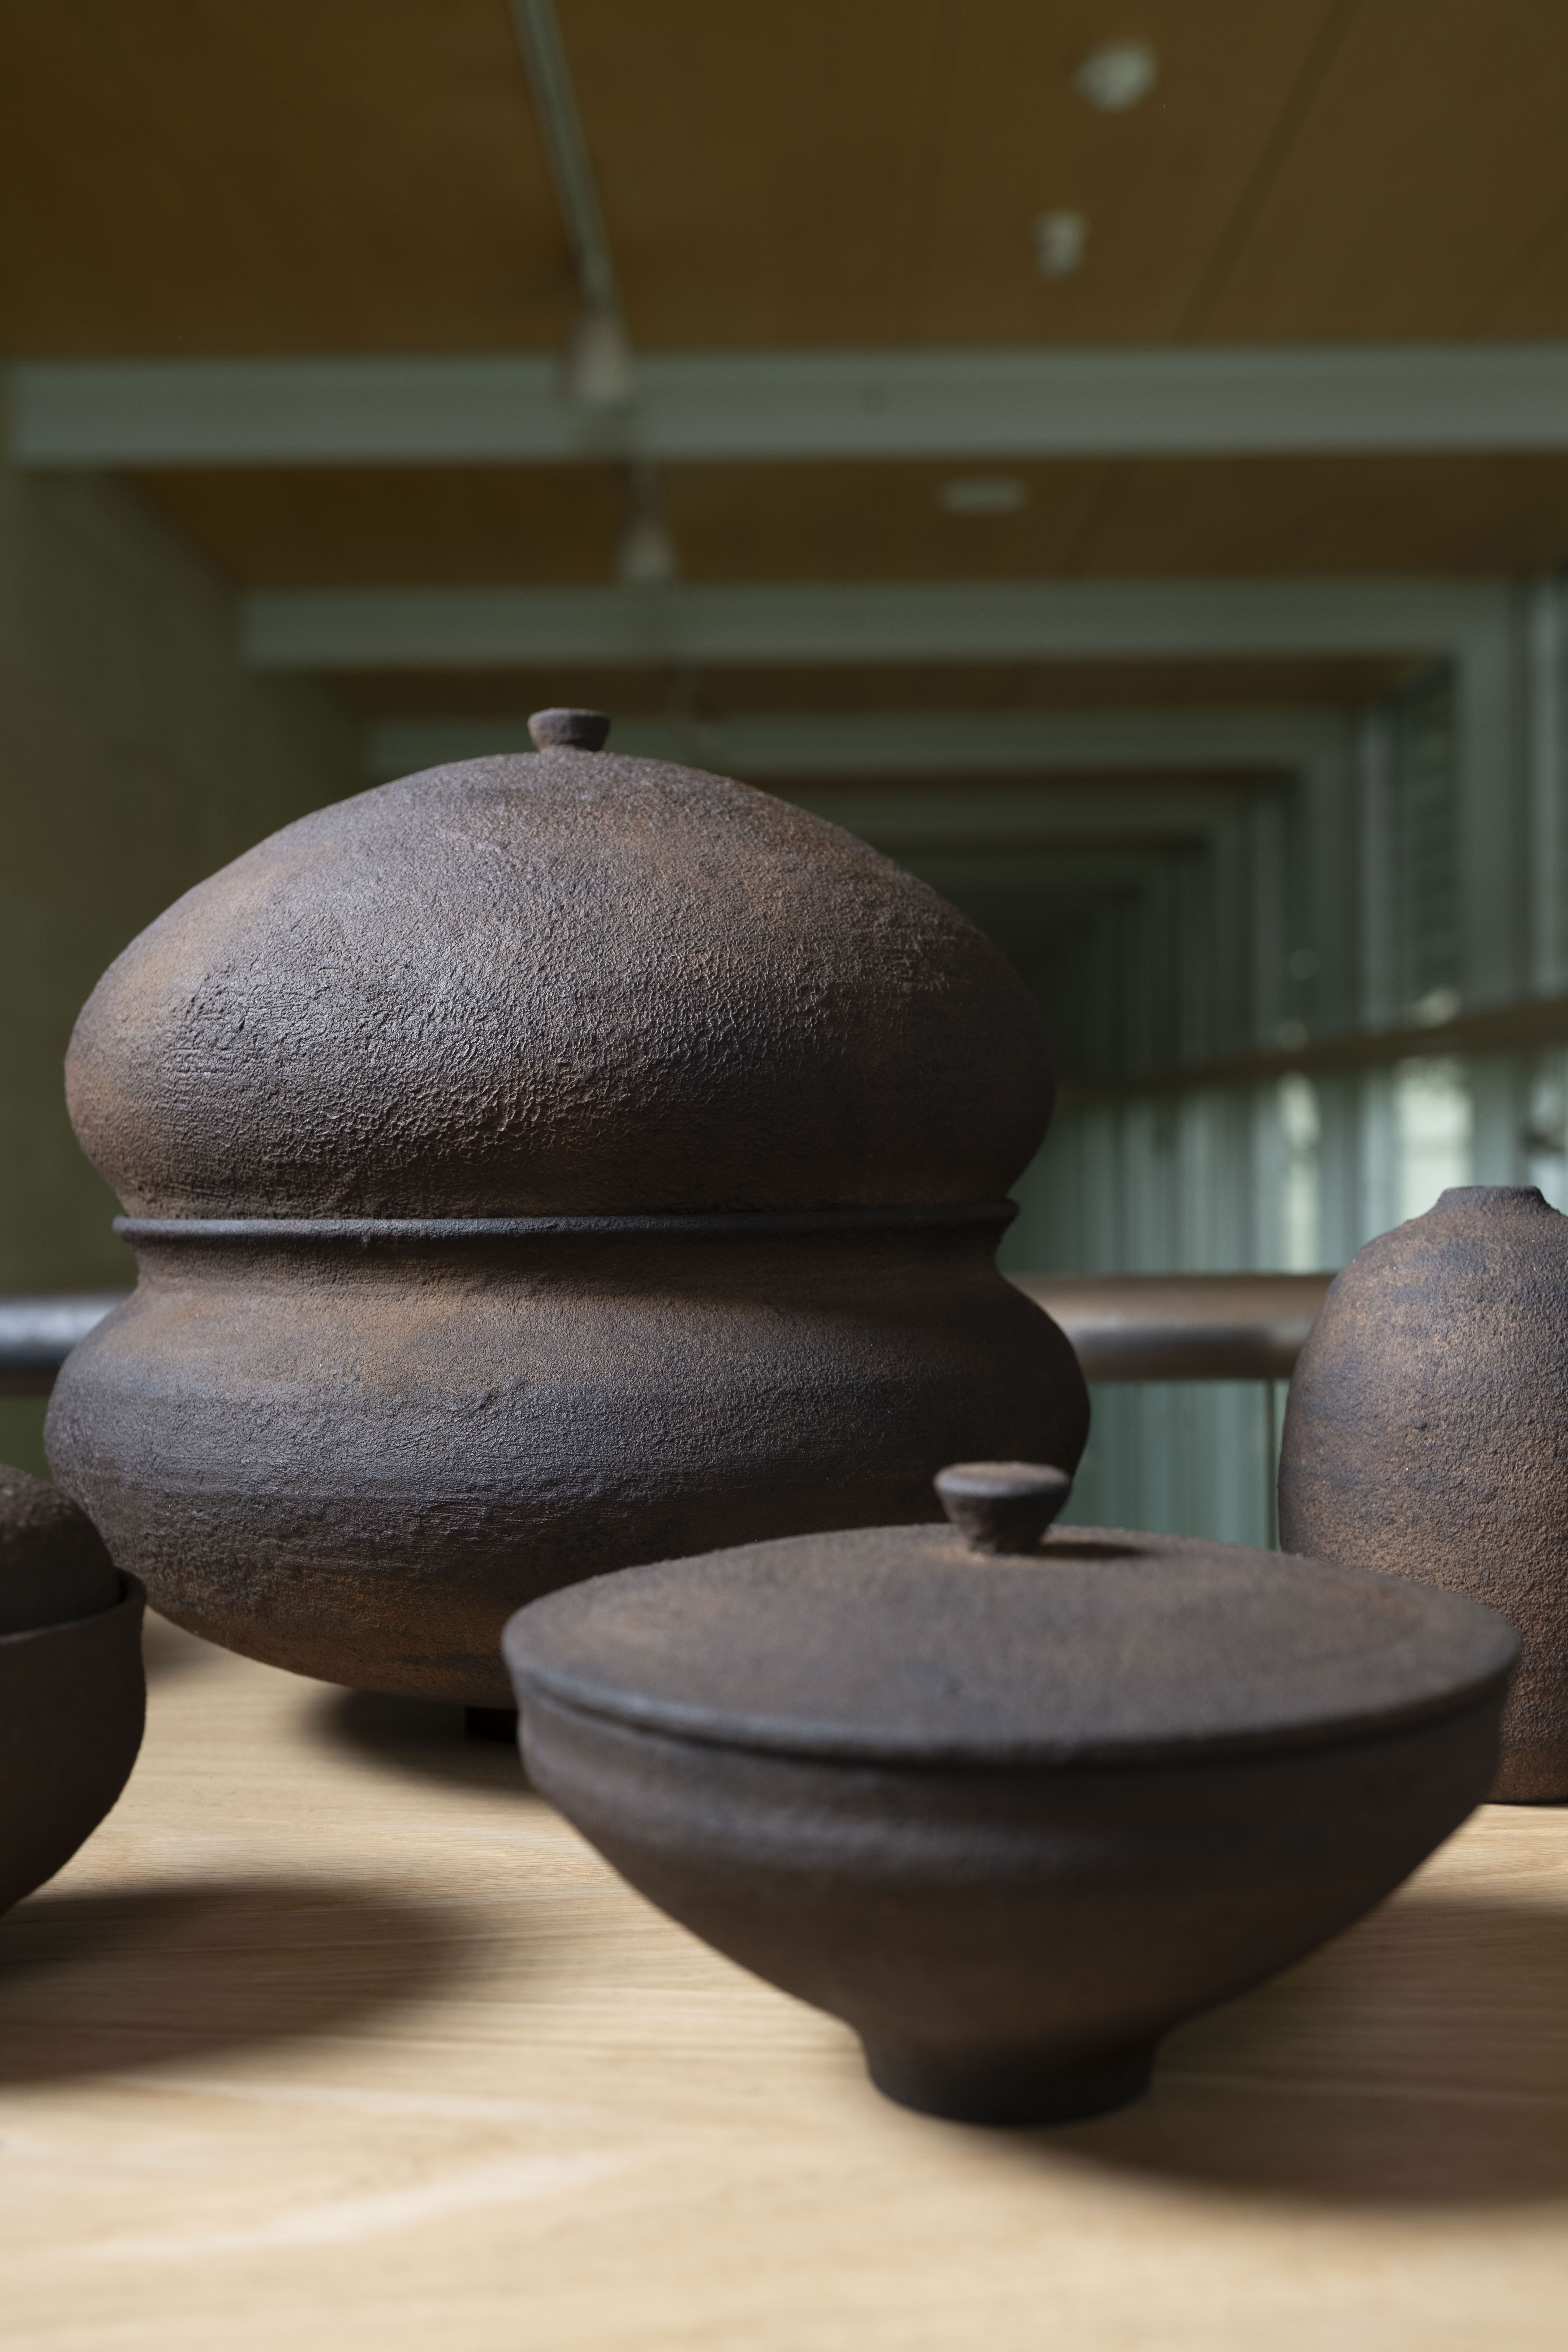 Carved wooden pots